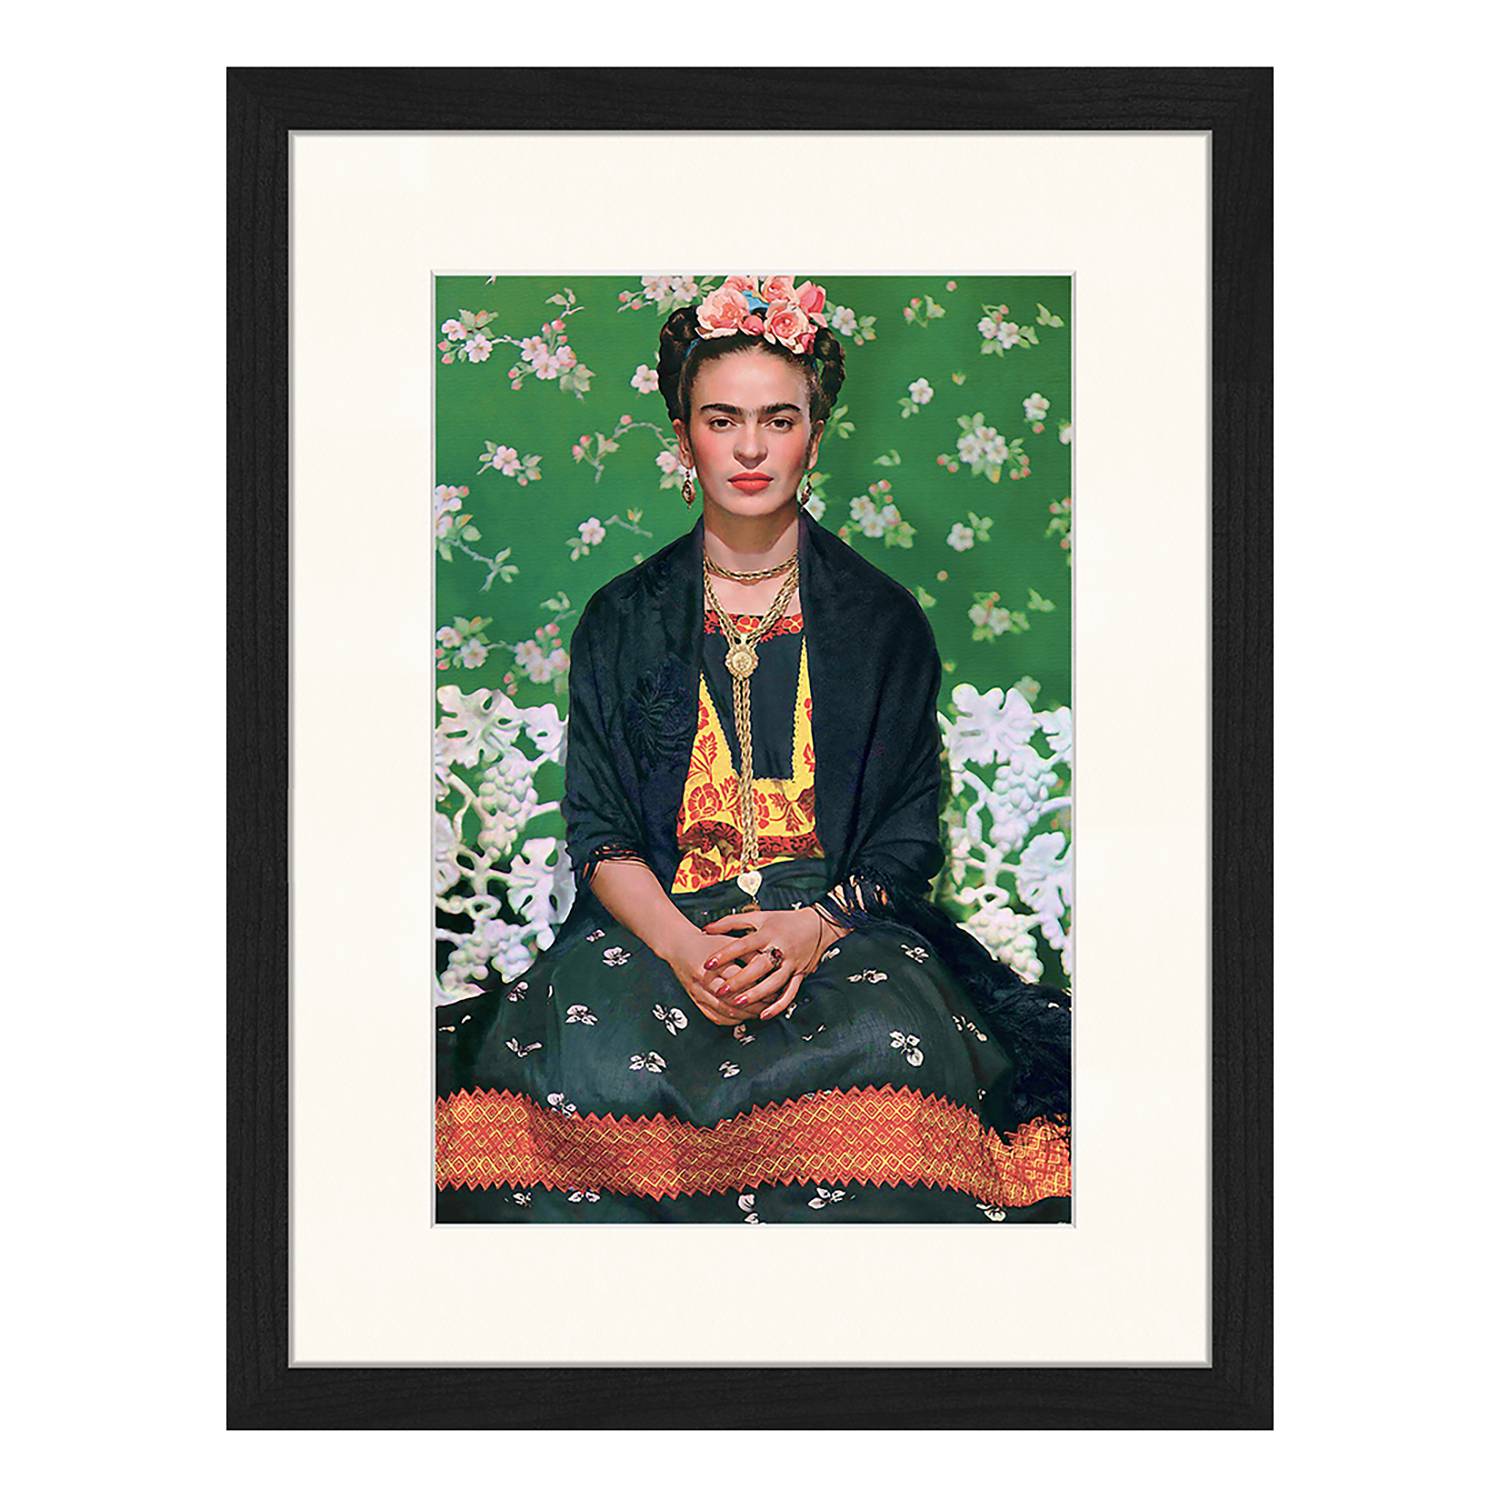 Bild Frida Kahlo en Vogue kaufen | home24